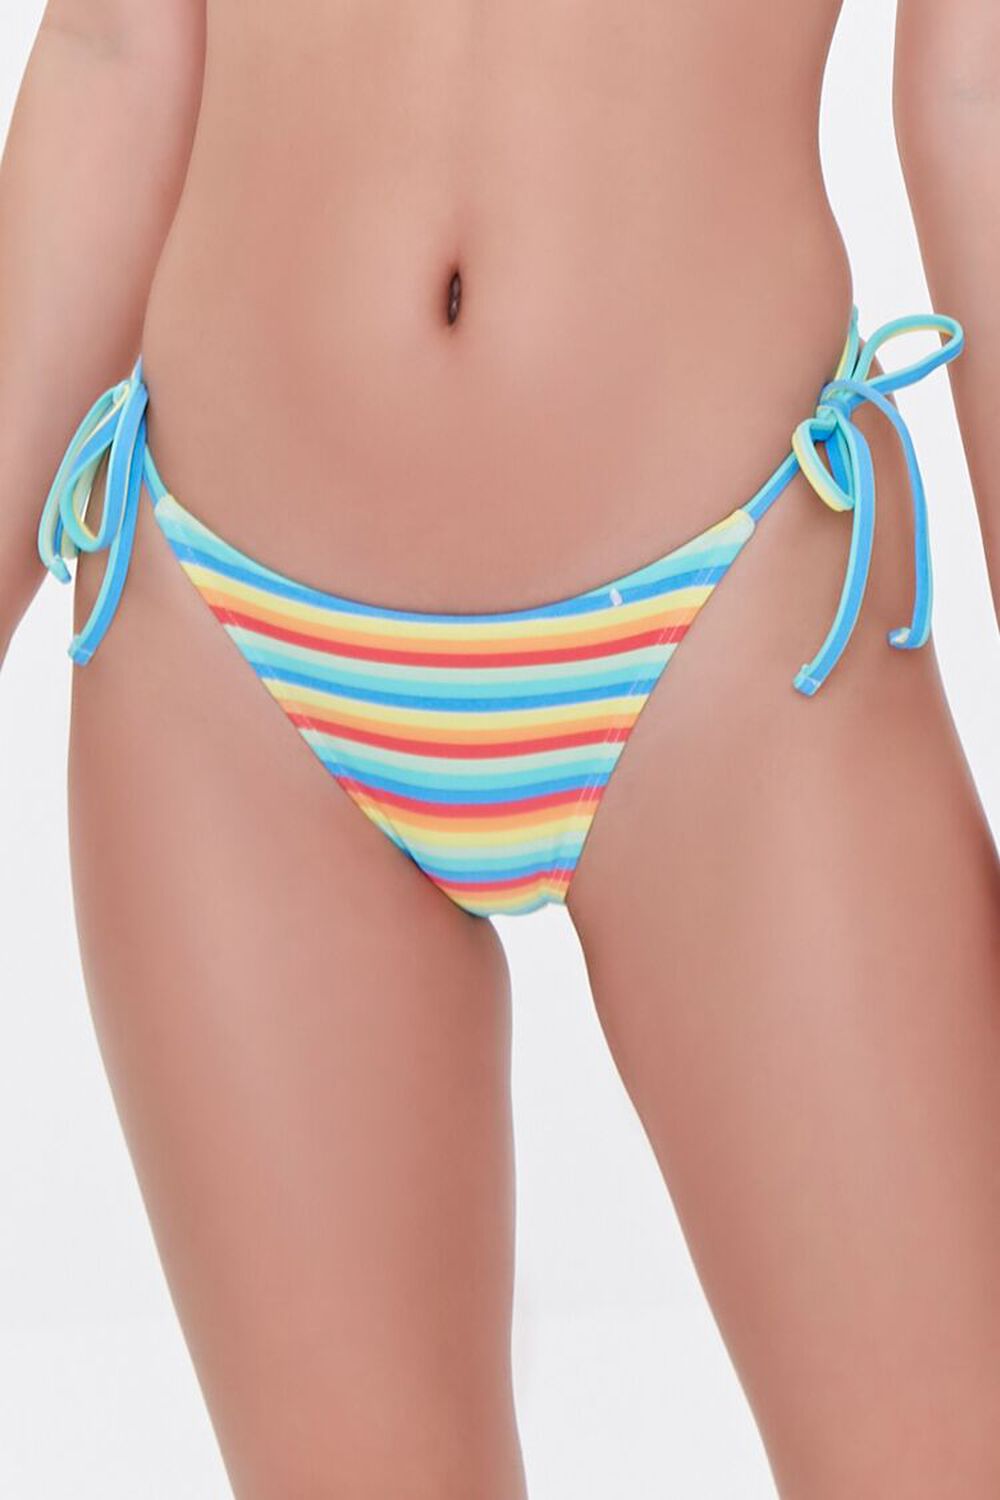 RAINBOW Rainbow-Striped Bikini Bottoms, image 2